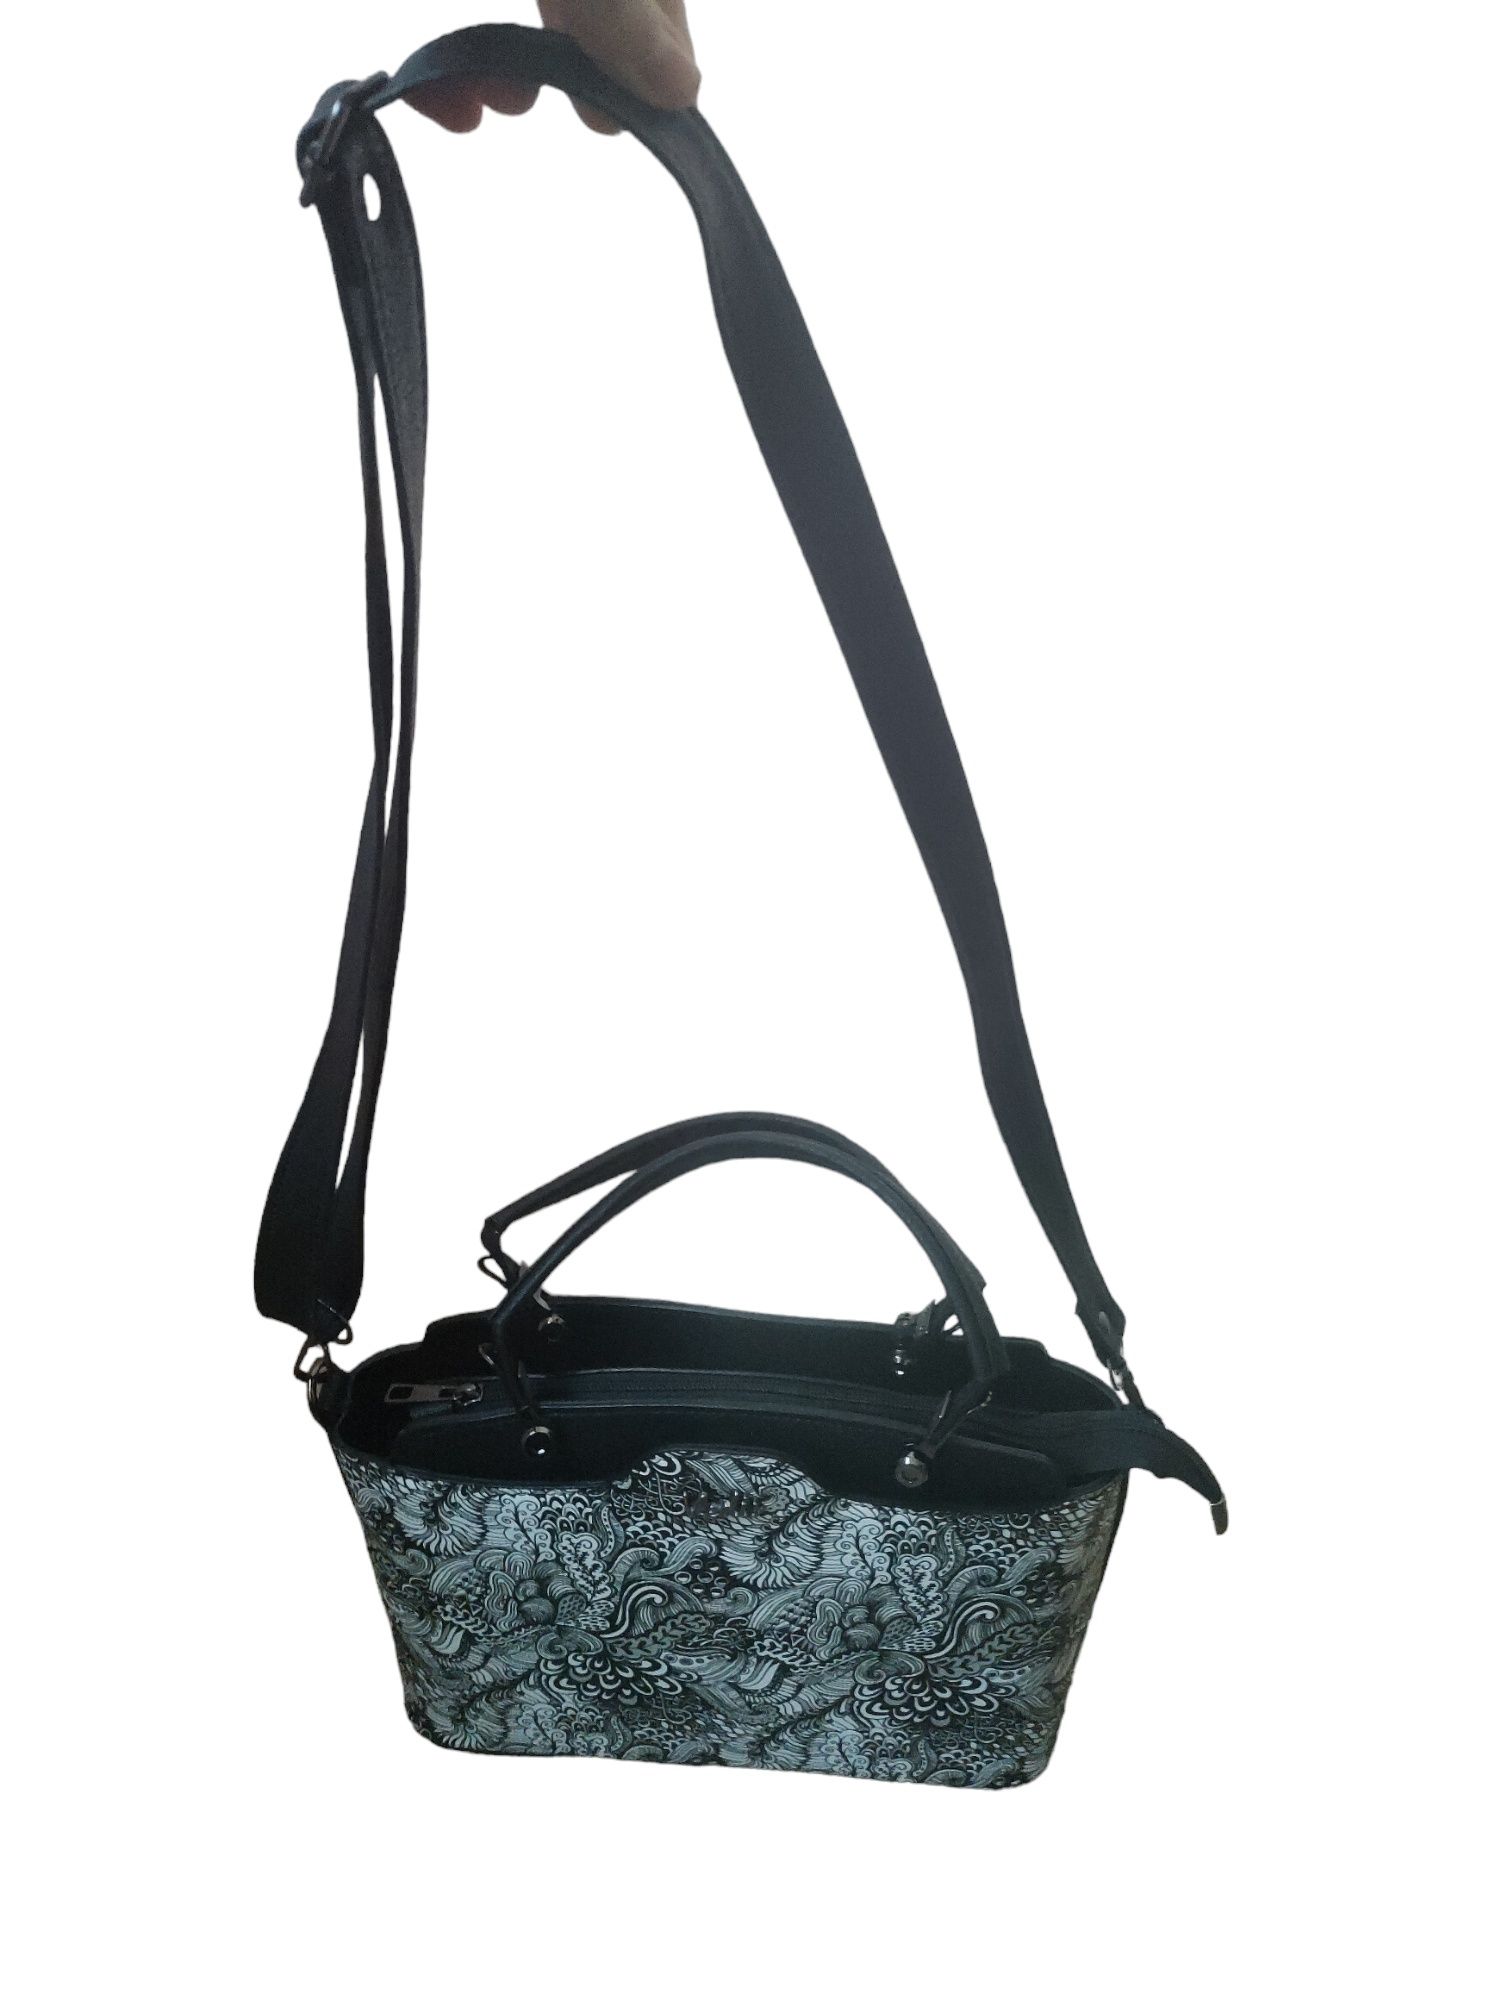 Стилна дамска чанта, подходяща за офис или ежедневна употреба